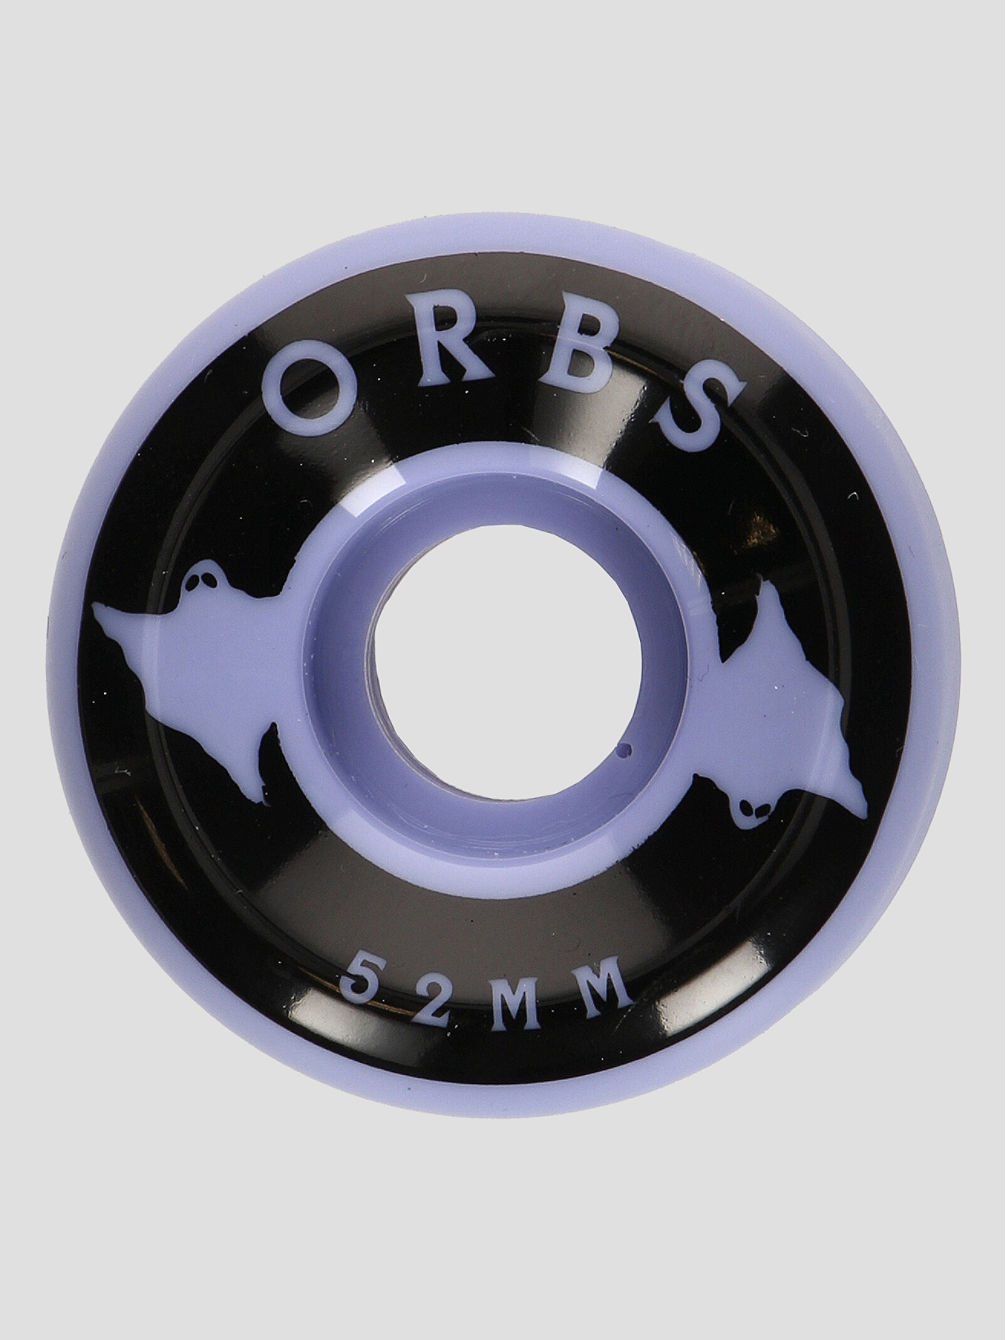 Orbs Specters - Conical - 99A 52mm Kolecka